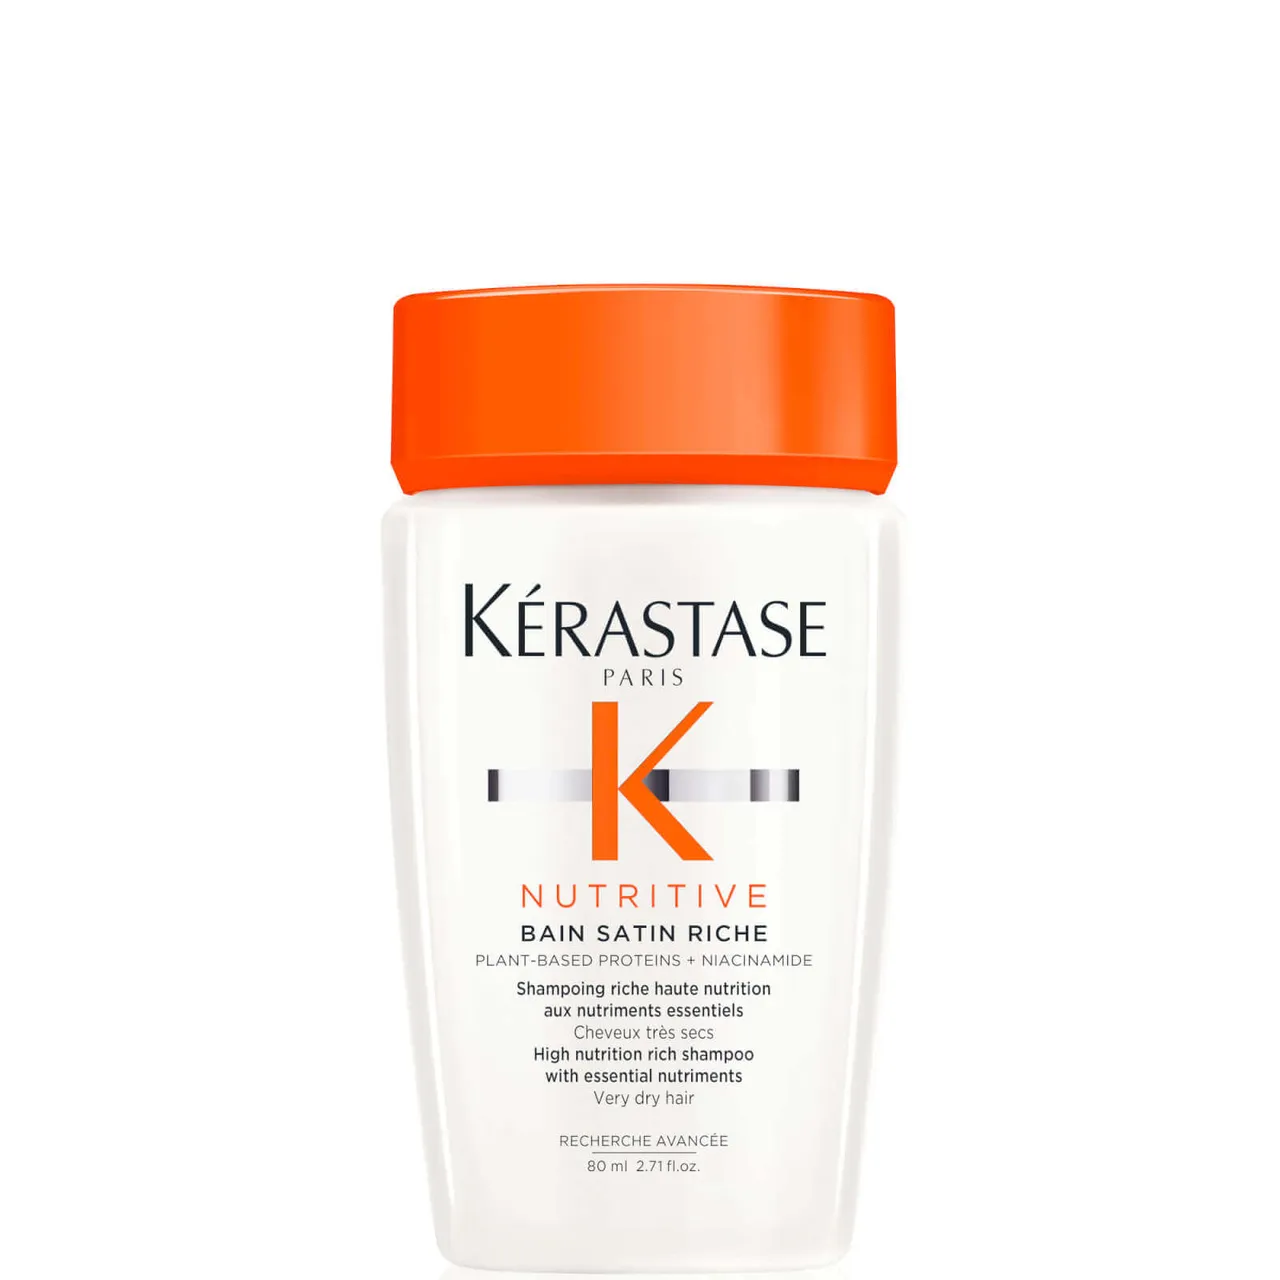 Kérastase Nutritive Nutri-Supplement Split Ends Serum For Dry Hair and Split Ends 50ml with Travel Size (Worth £66.28)